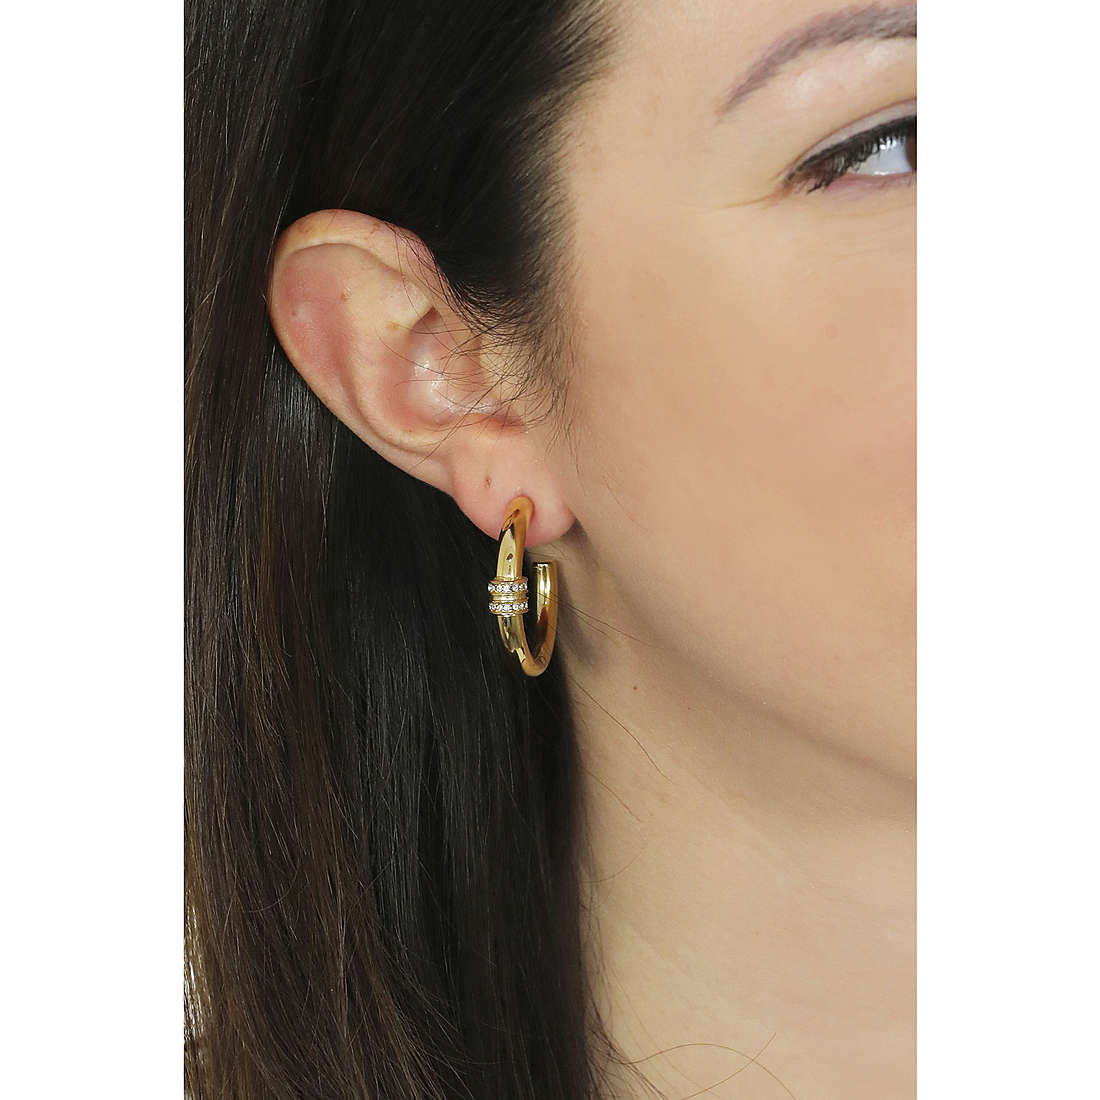 Morellato earrings Creole woman SAUP06 wearing